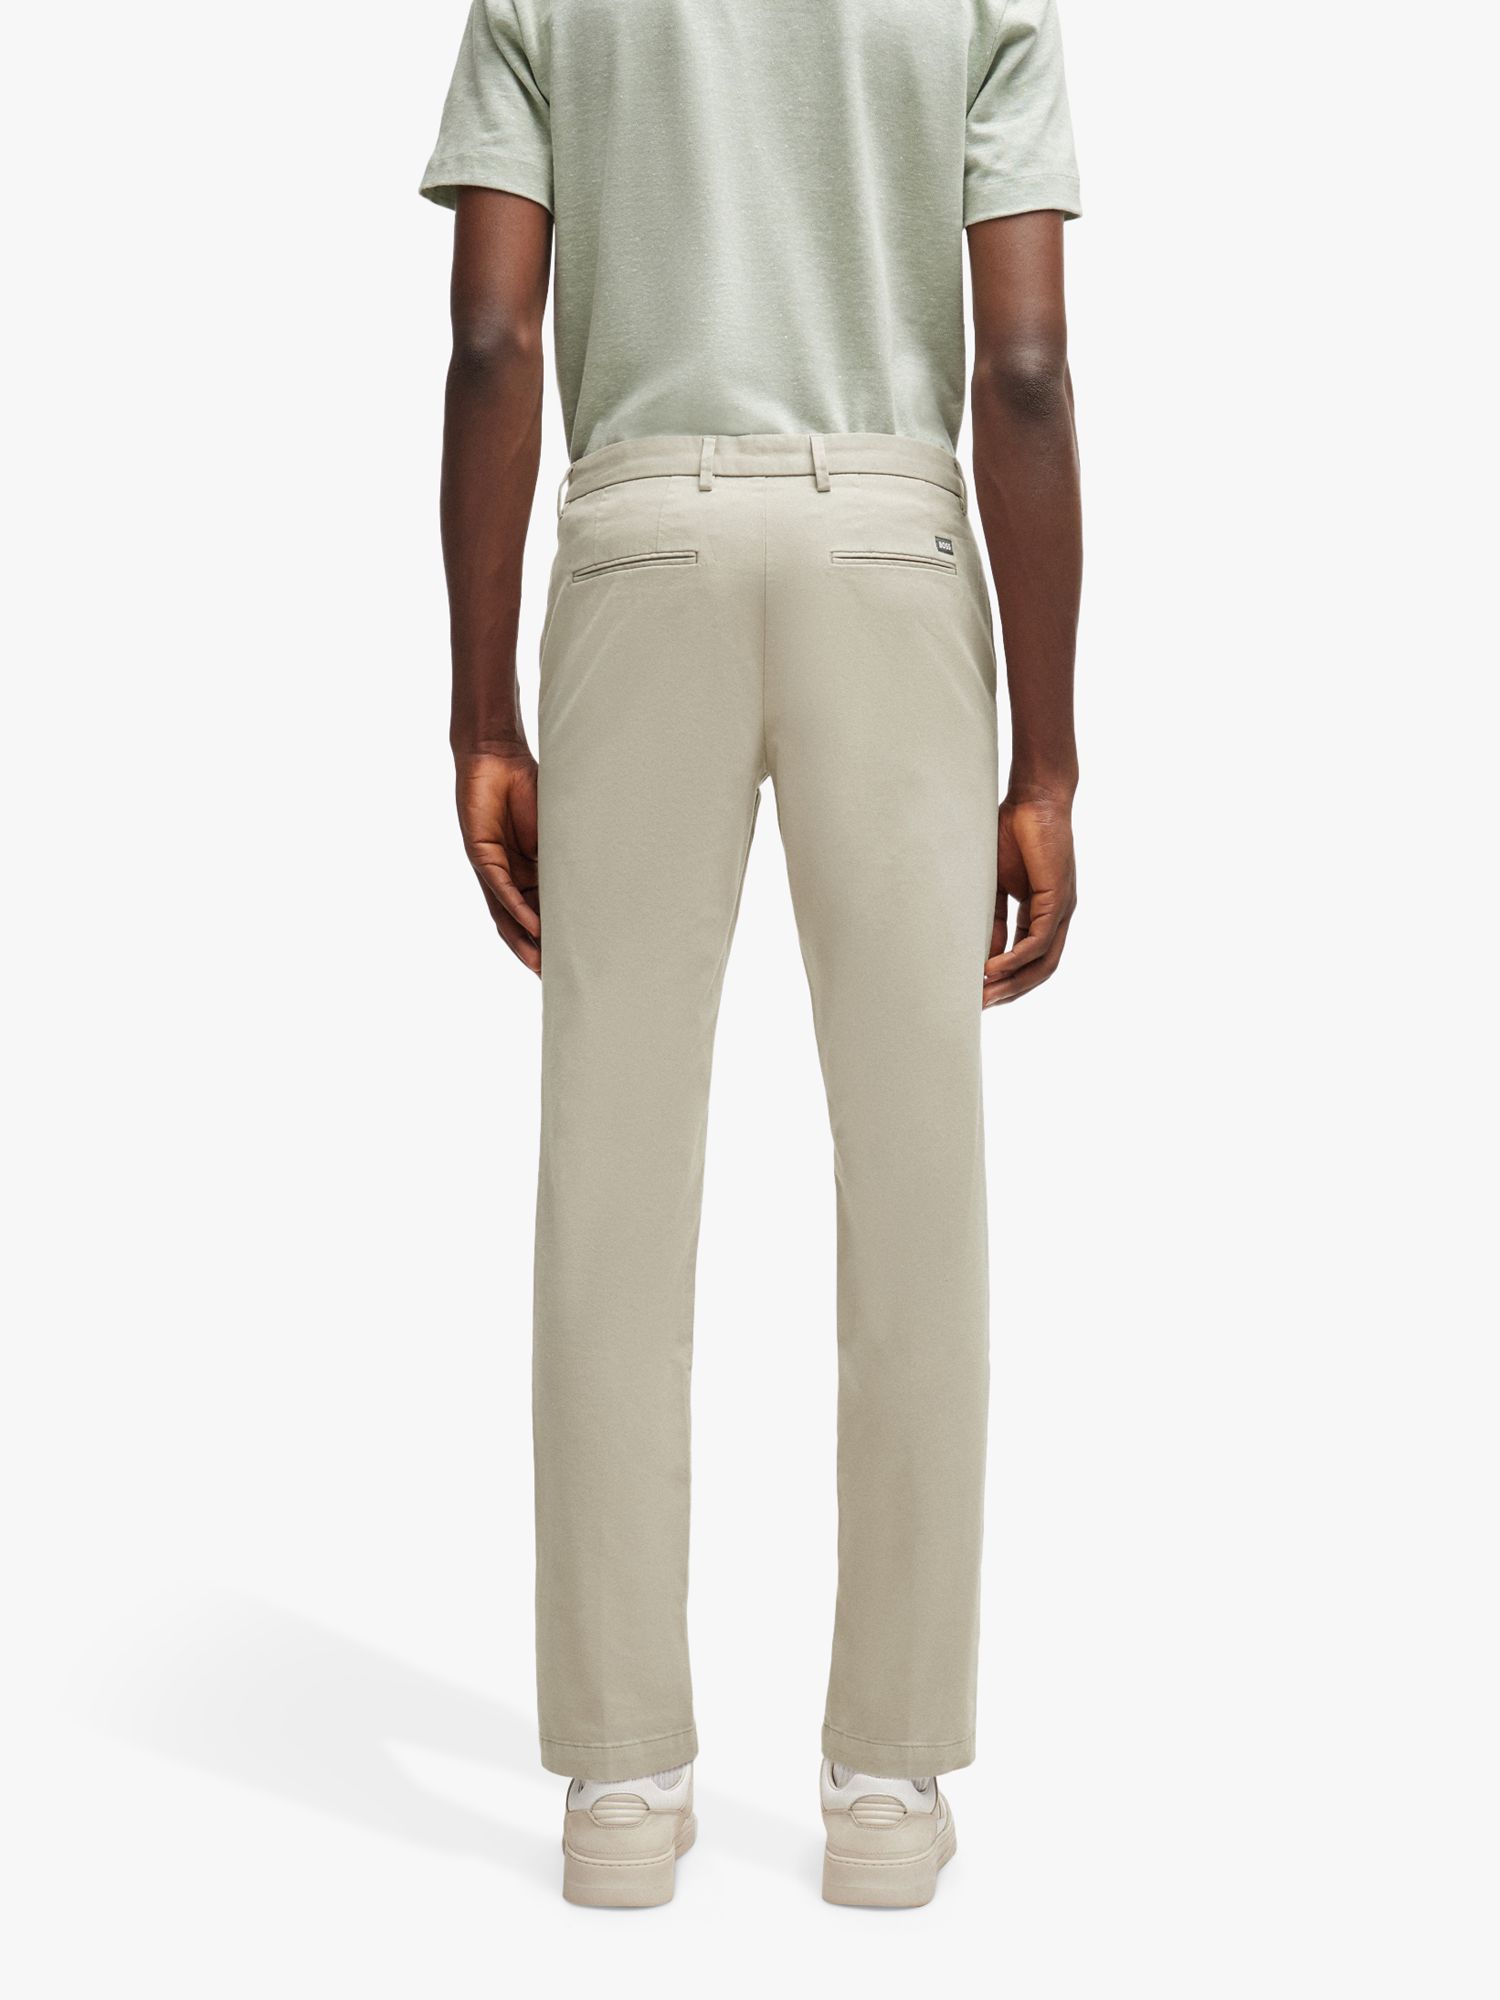 Buy BOSS Kaito Slim Fit Trousers, Dark Beige Online at johnlewis.com